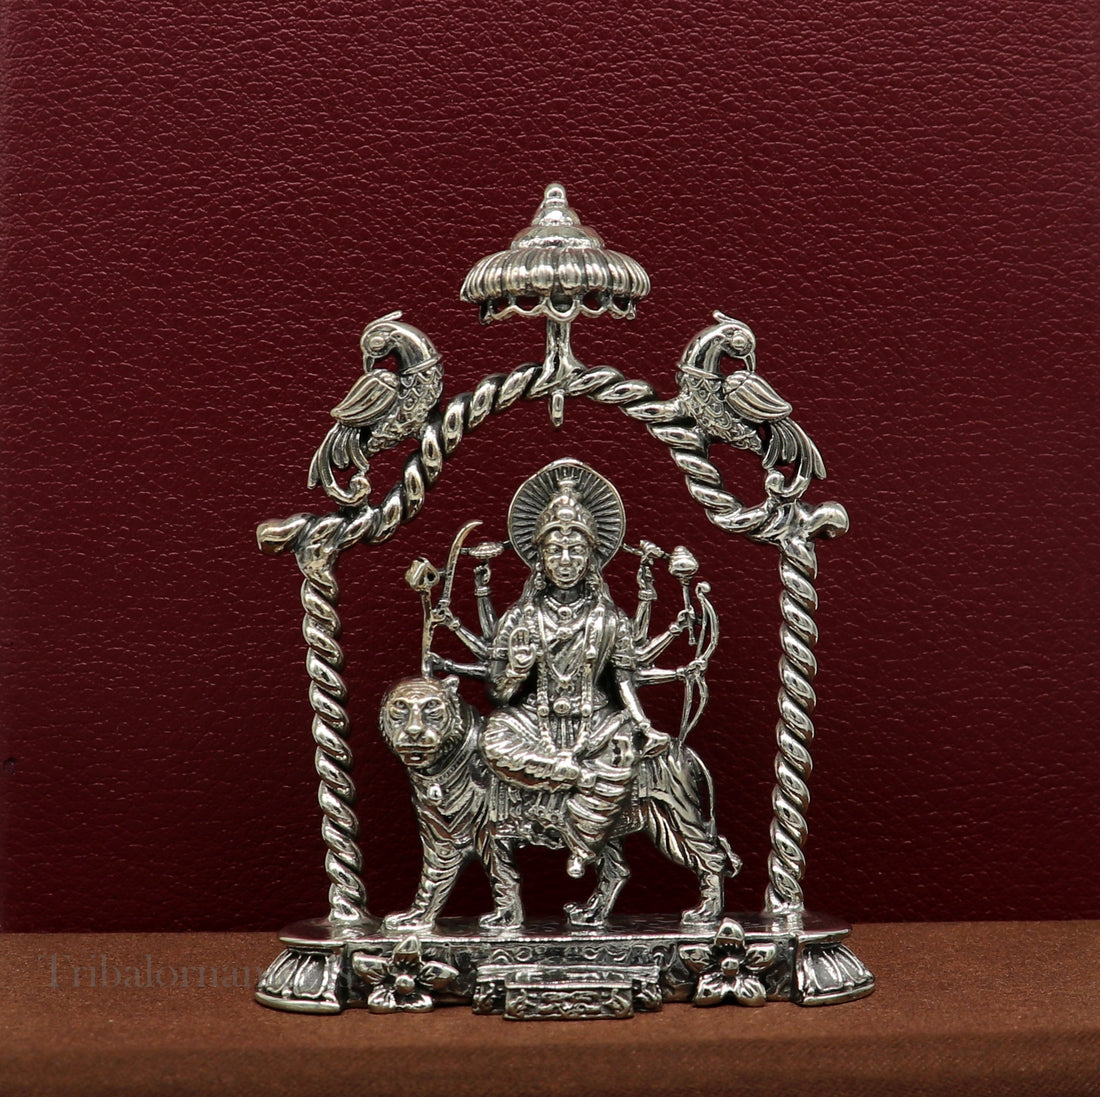 925 Sterling silver Goddess Amba/Bhawani, Durga, Santoshi maa, Pooja Articles, handcrafted statue sculpture amazing puja article art176 - TRIBAL ORNAMENTS